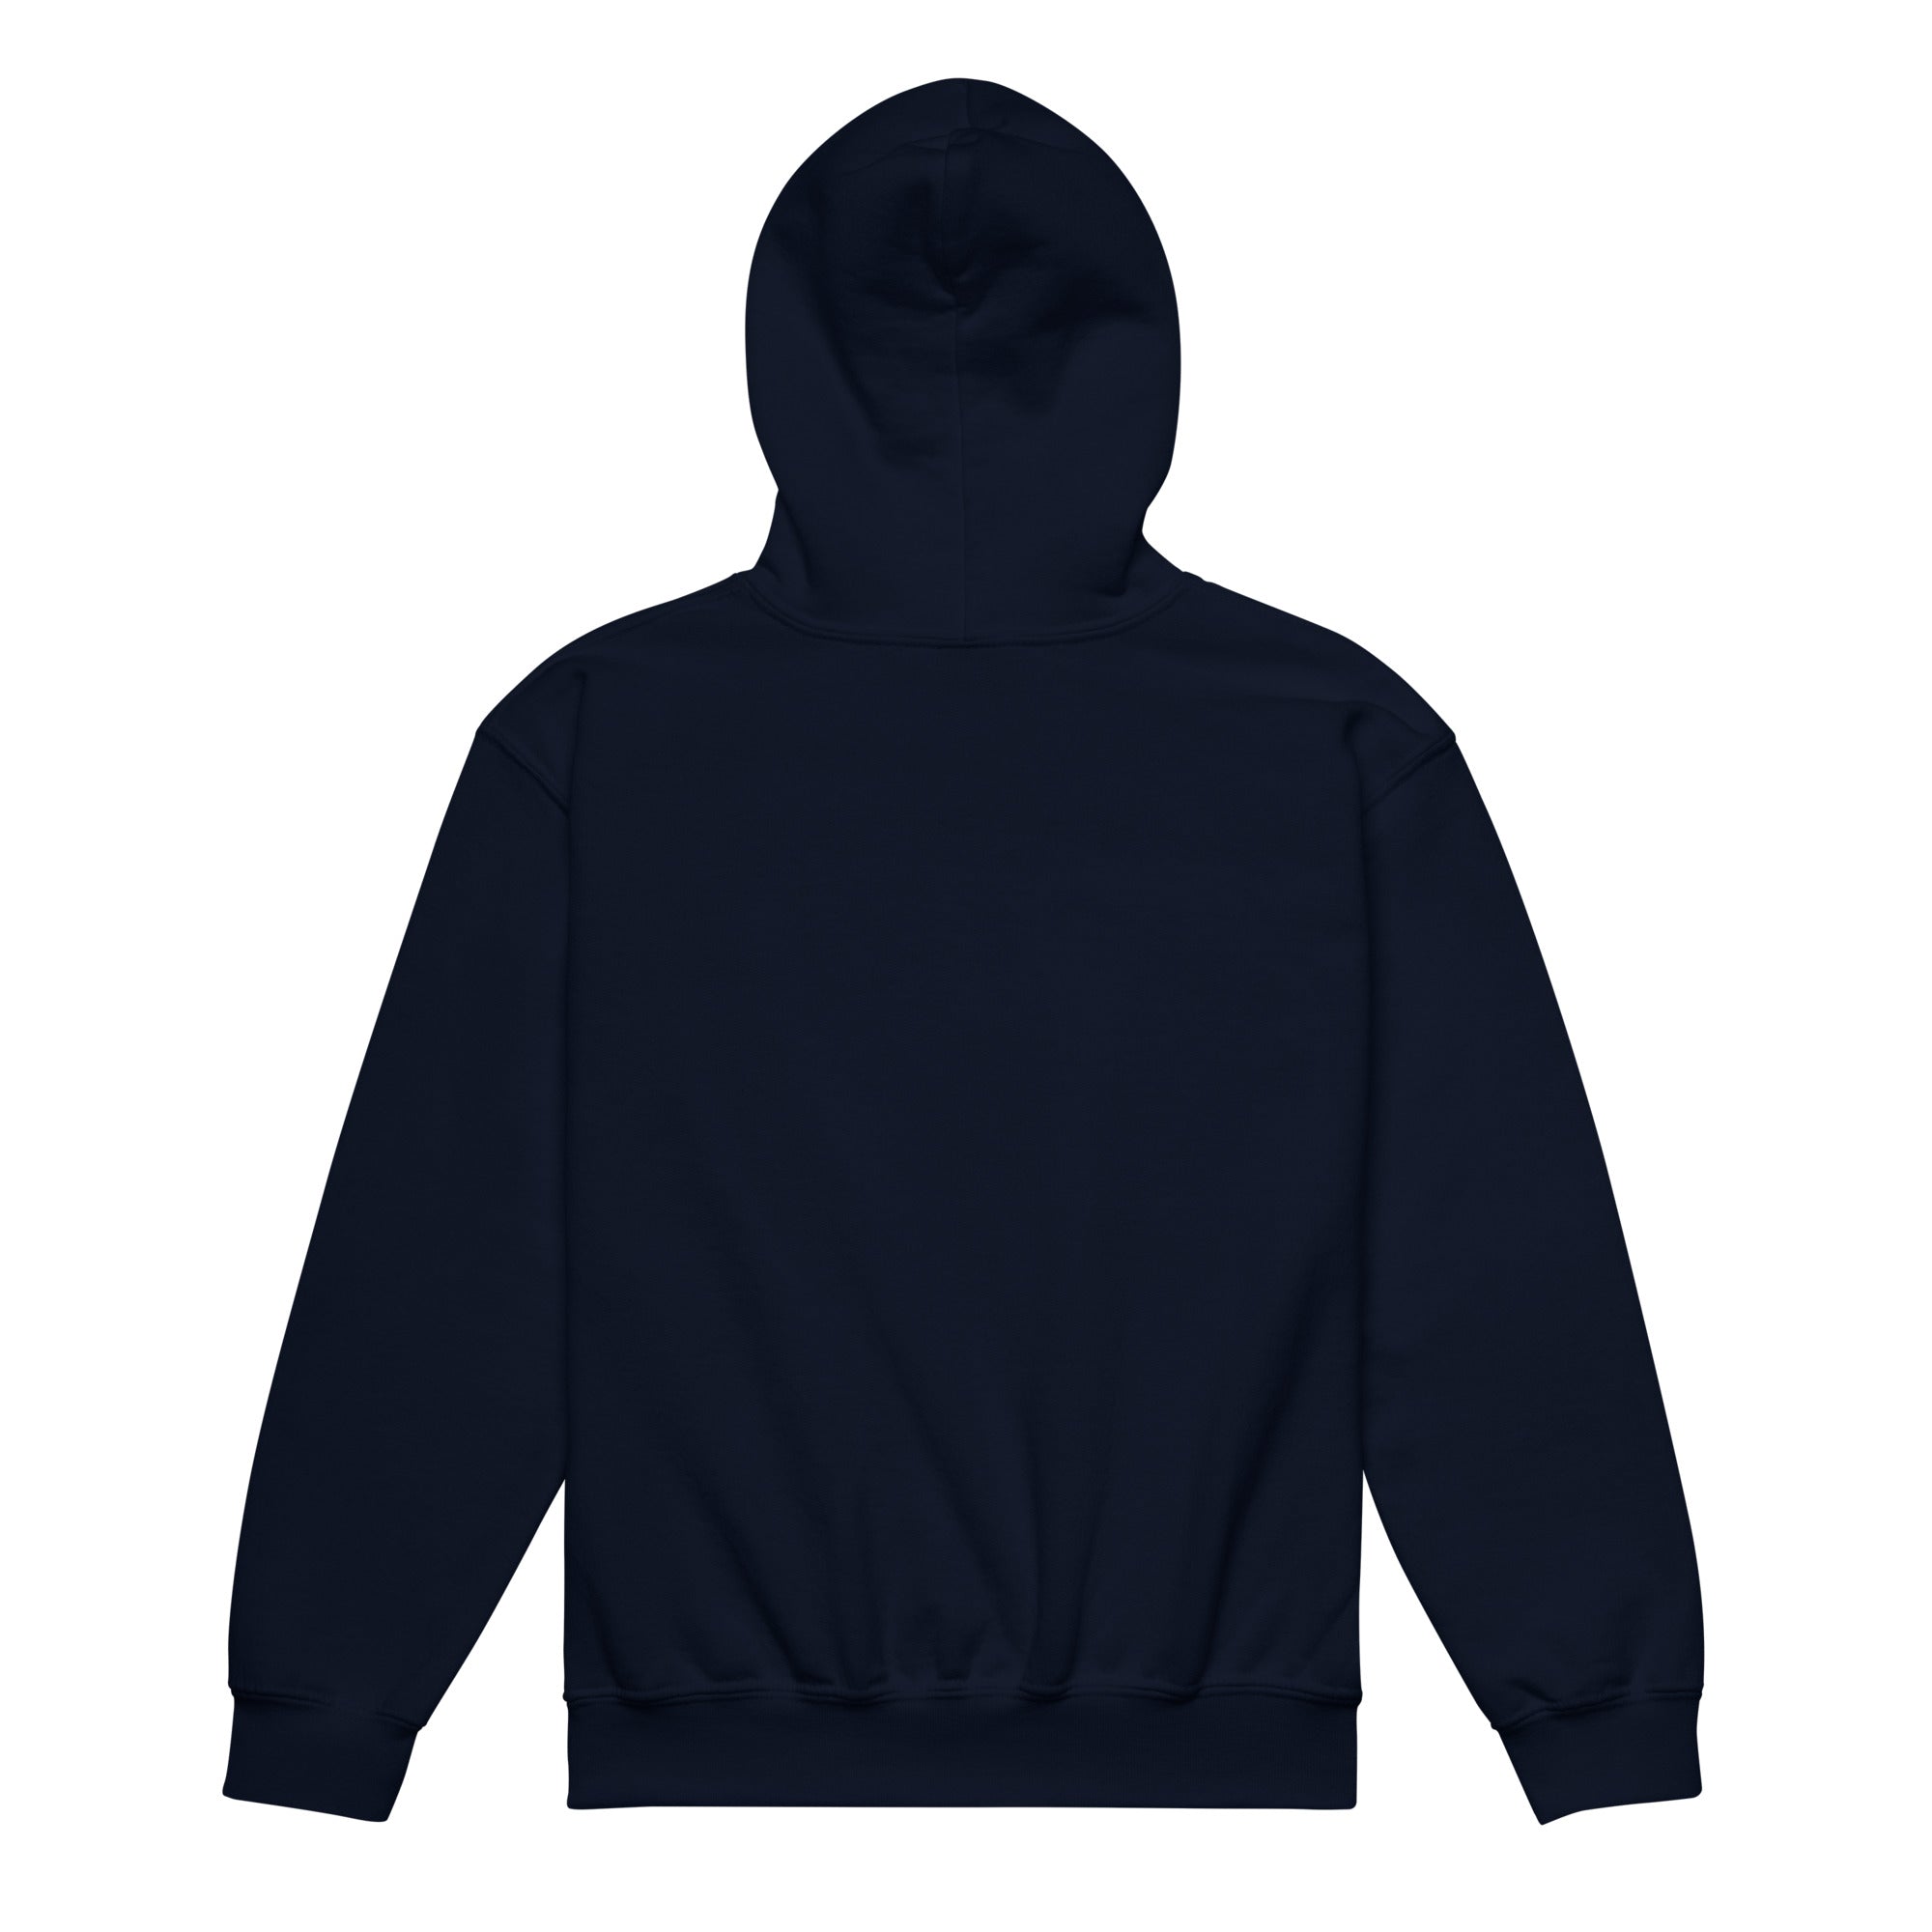 BCB  I  Premium Youth heavy blend hoodie